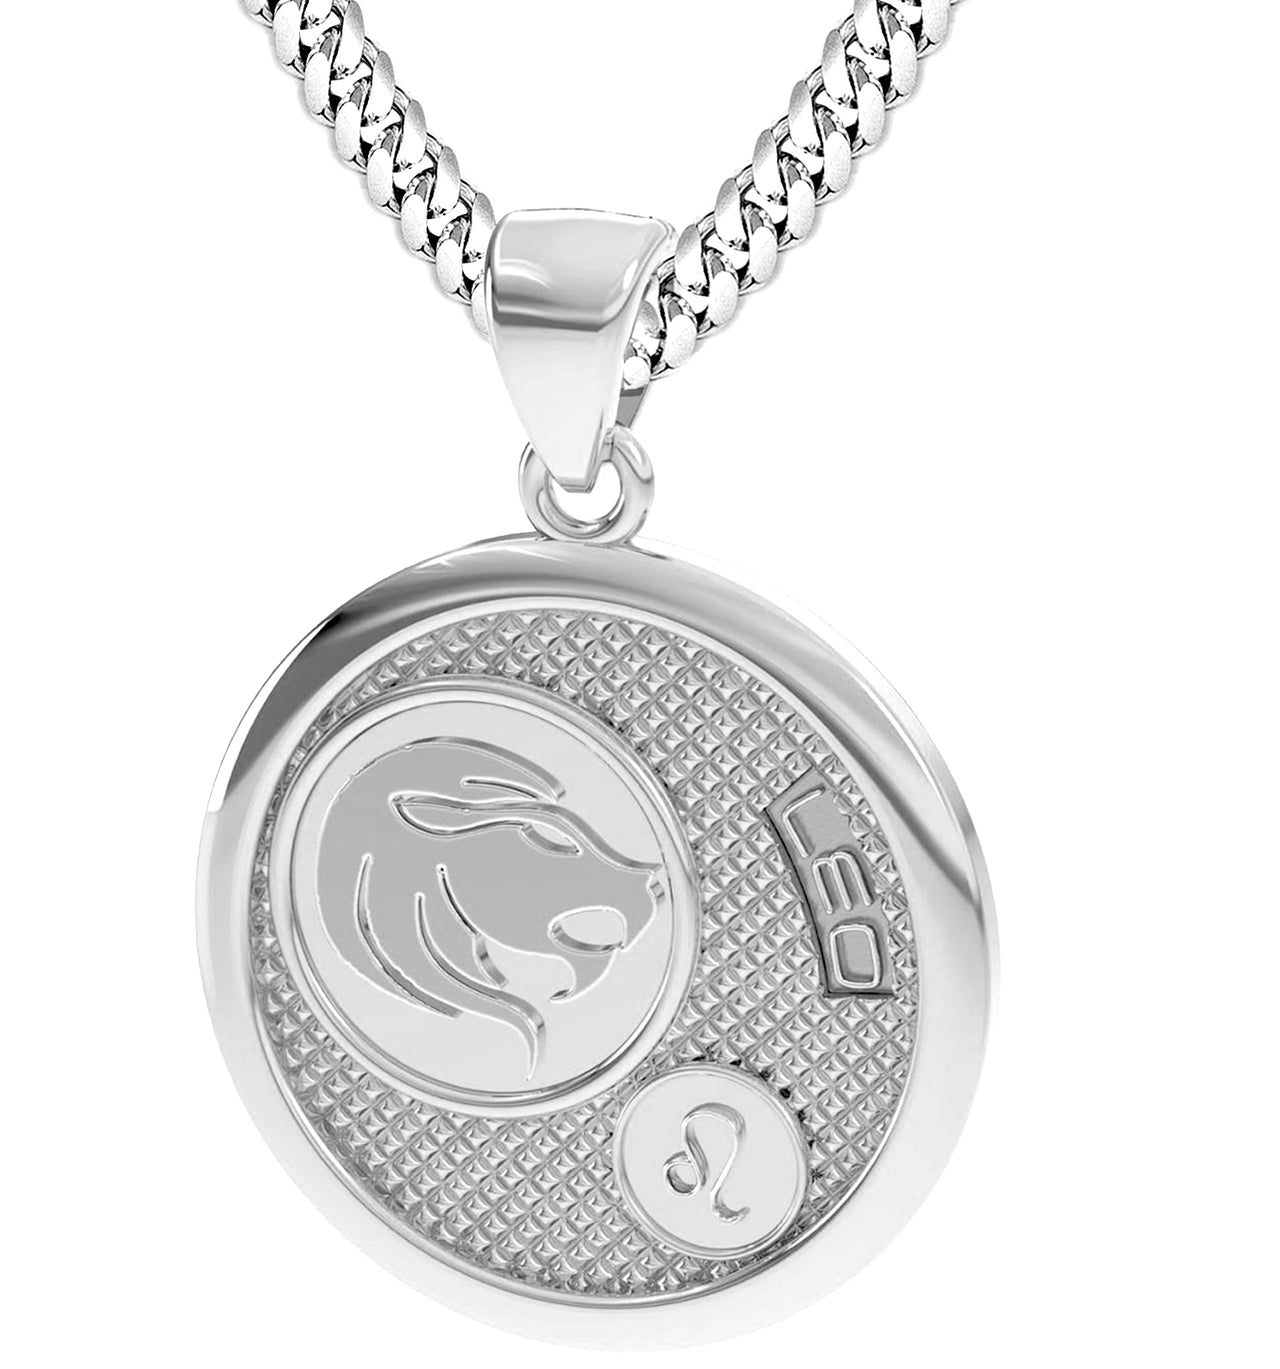 Men's 925 Sterling Silver Round Leo Zodiac Polished Finish Pendant Necklace, 33mm